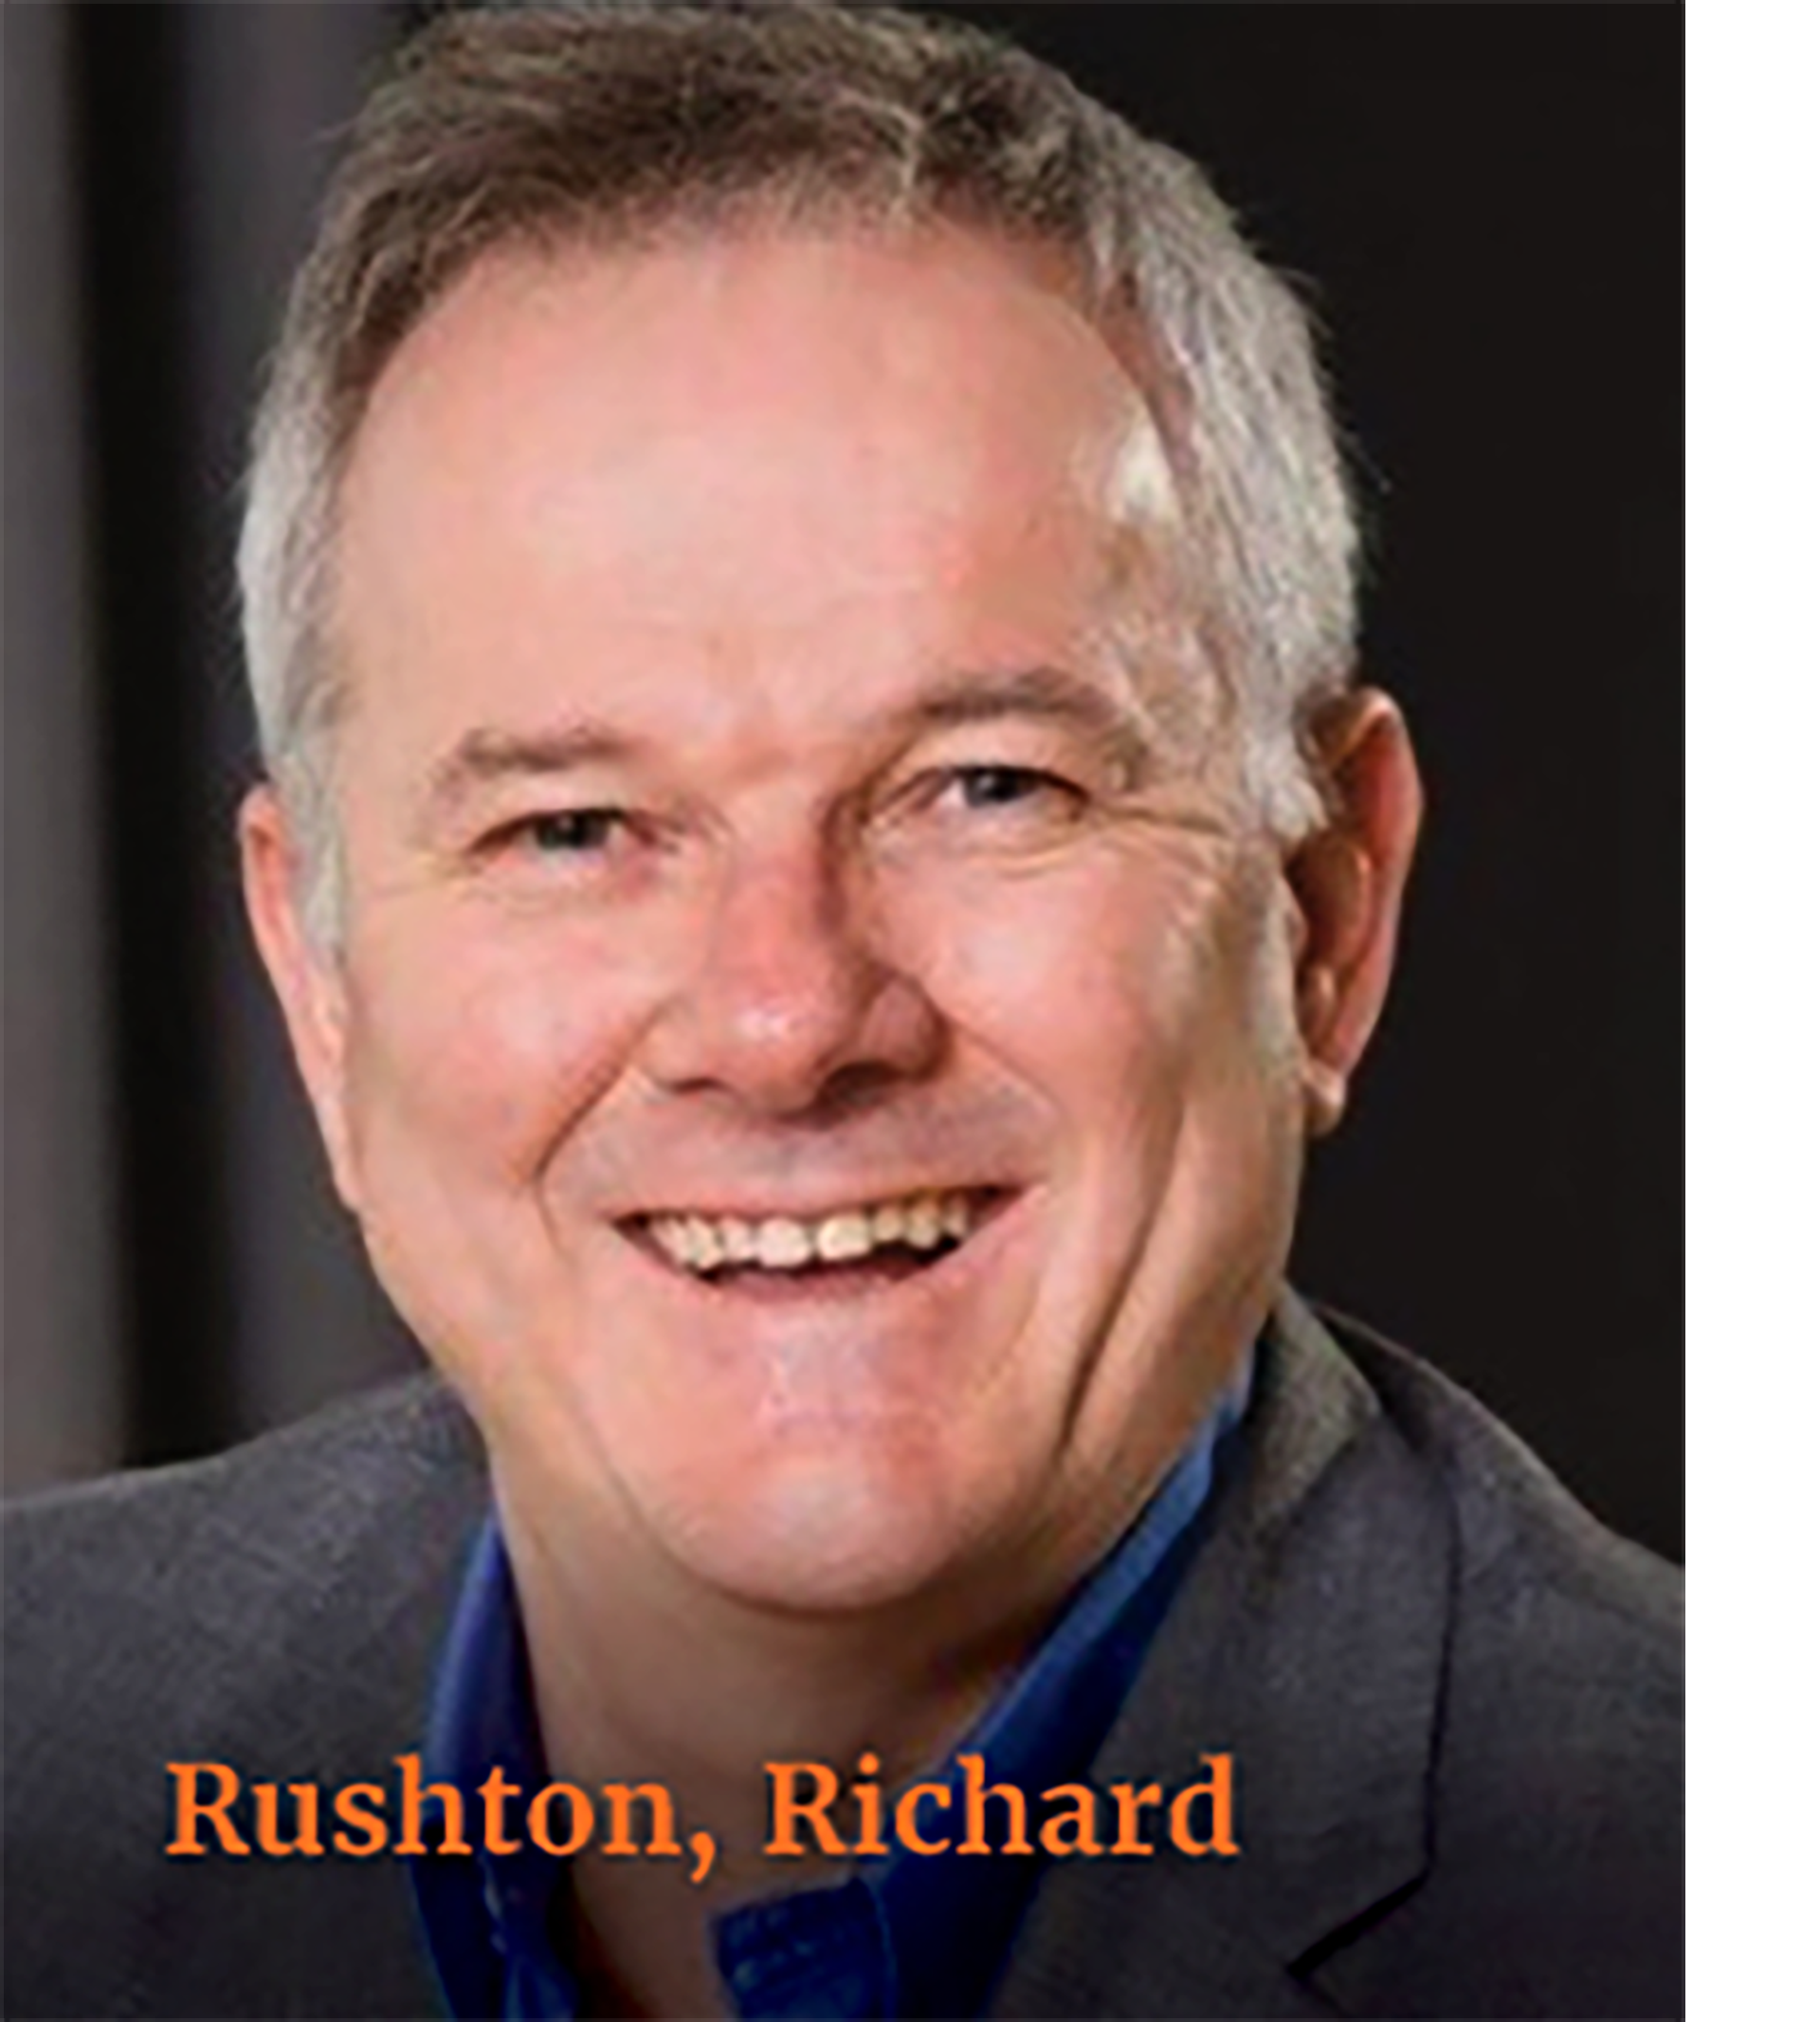 Rushton Richard